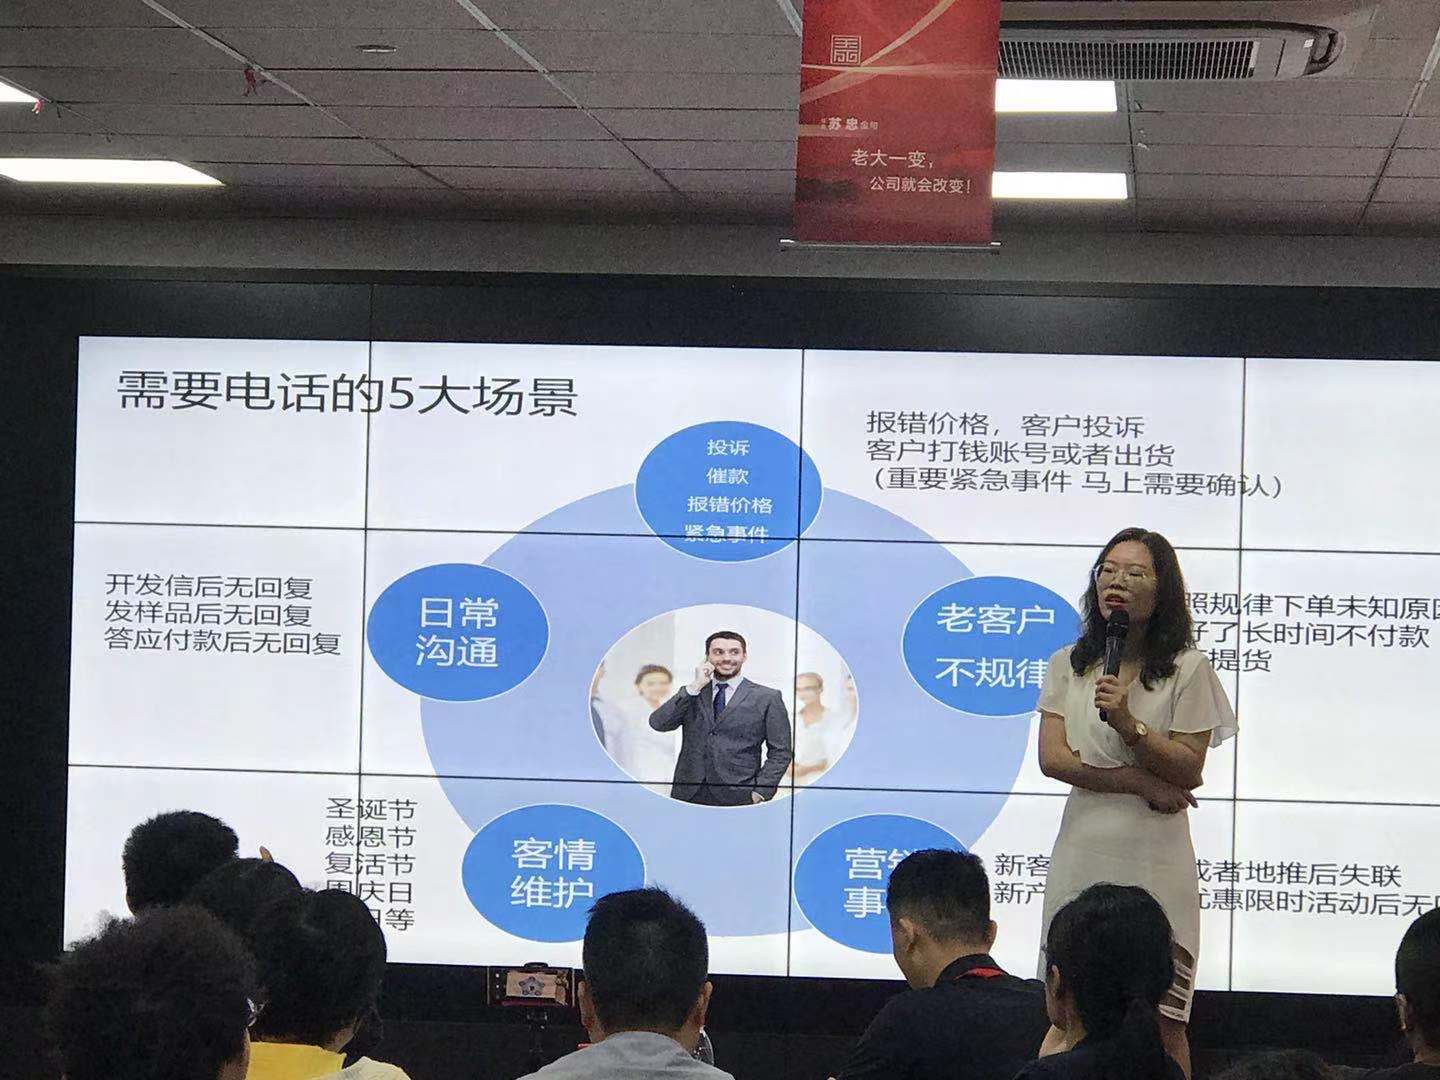 Suzhou ZEK Menghadiri Kursus Pelatihan Panggilan Telepon Perdagangan Luar Negeri Di Pabrik Vacuum Cleaner Nirkabel Portabel Hangzhou